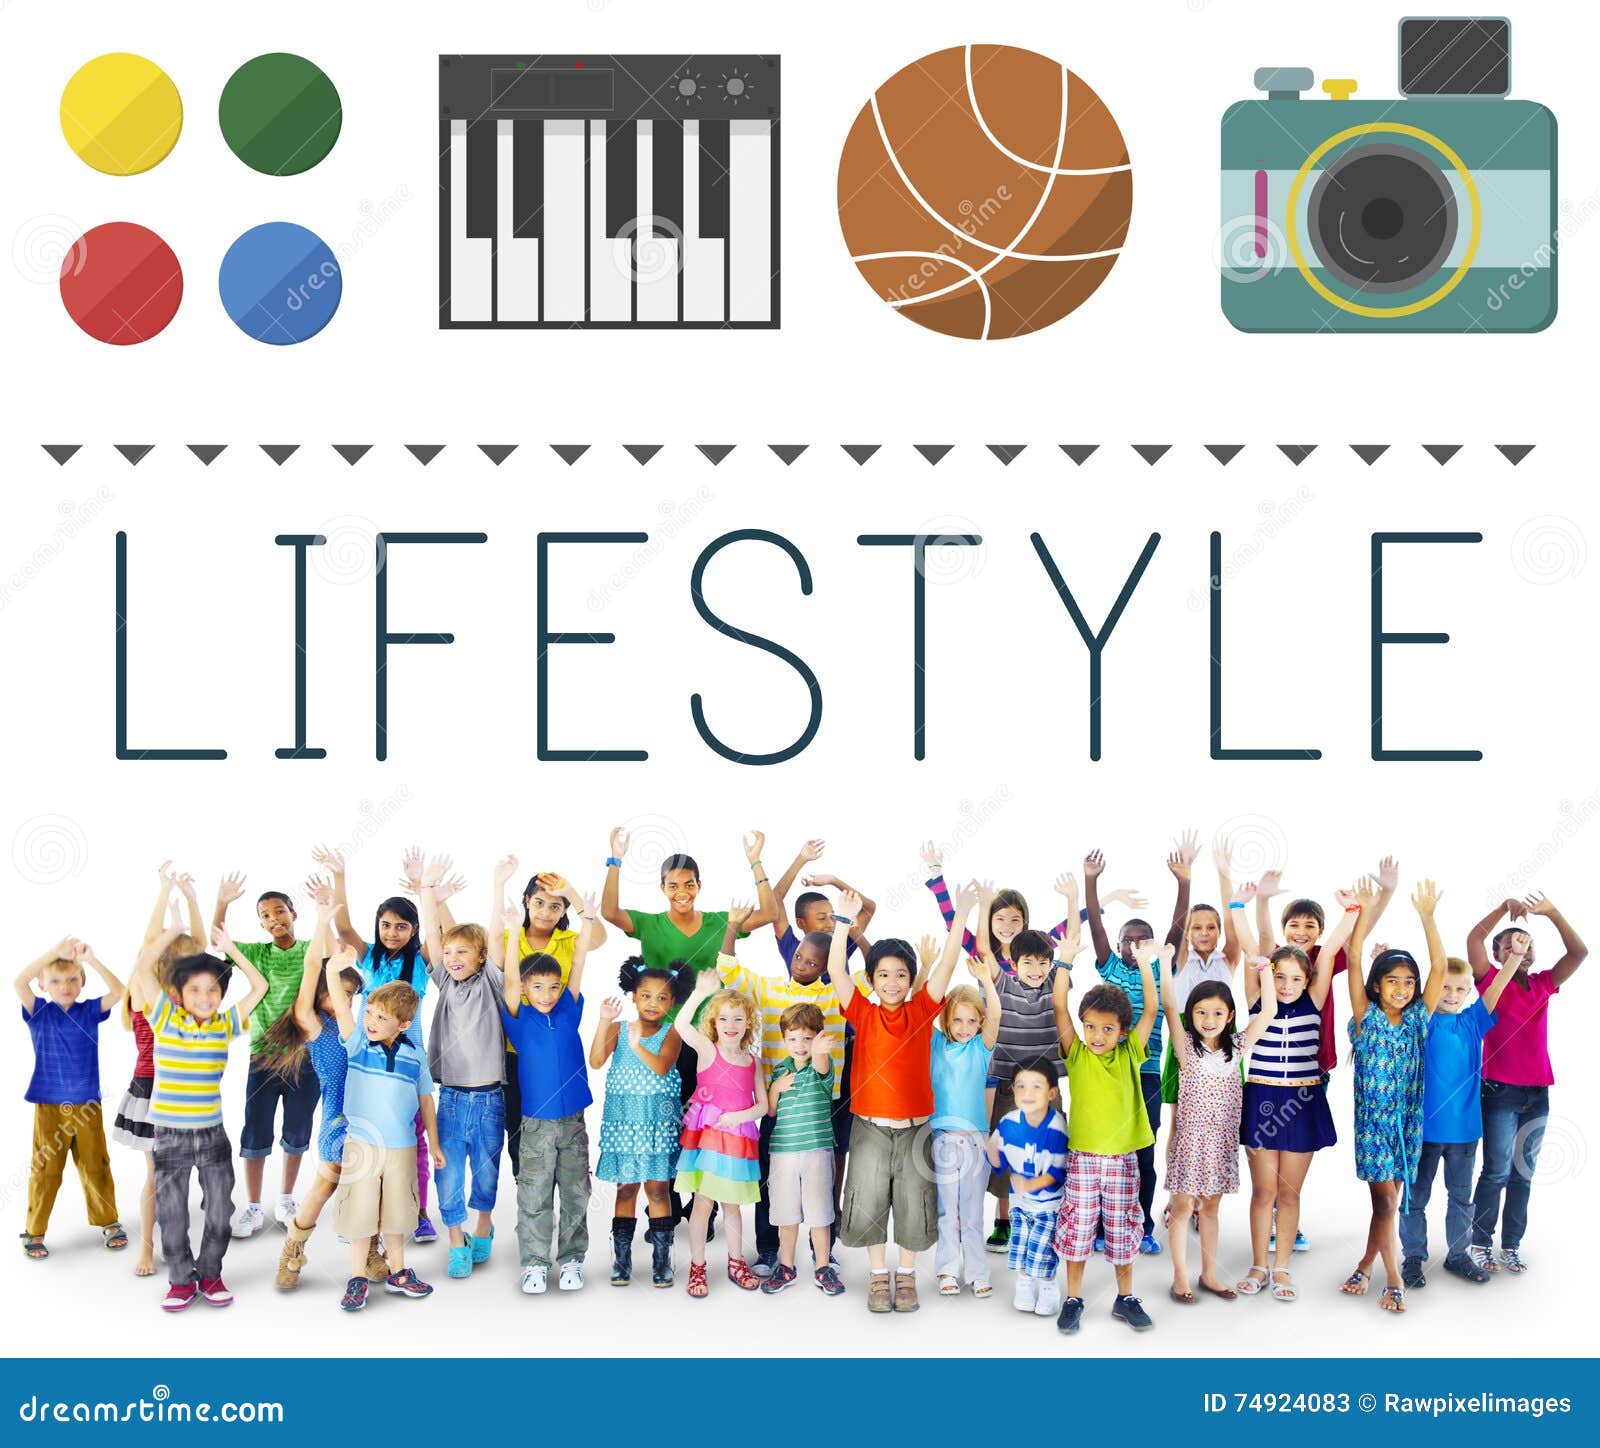 Lifestyle Culture Habits Hobbies Interests Life Concept Stock Image